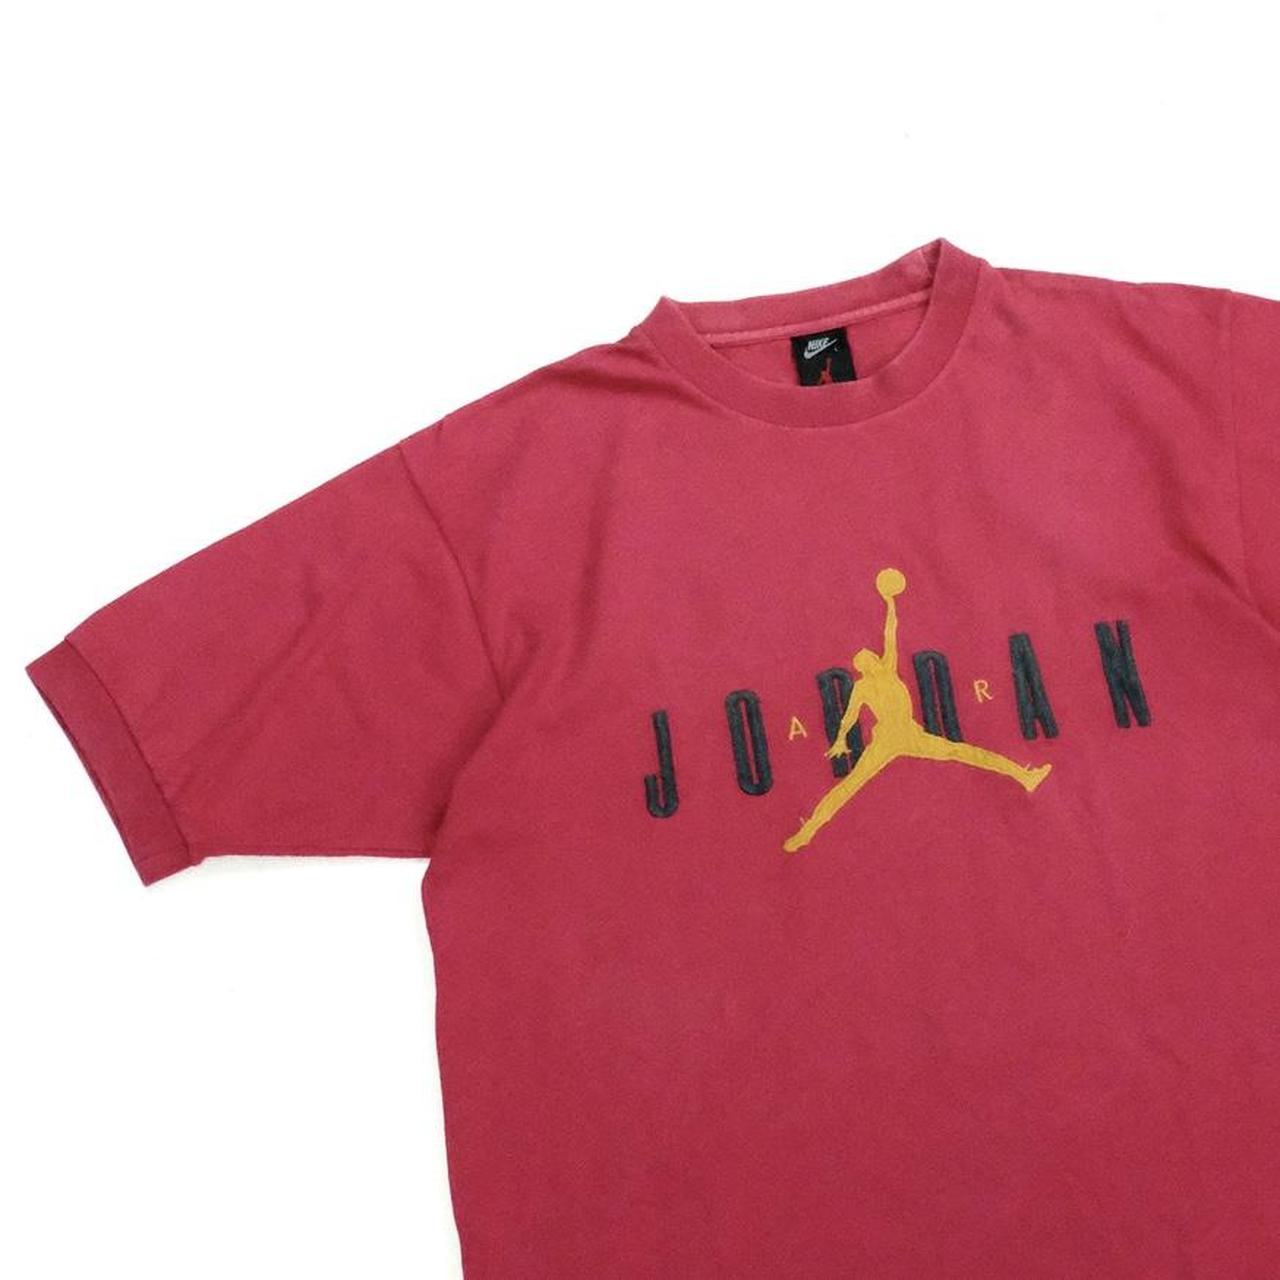 Vintage Nike Air Jordan t-shirt